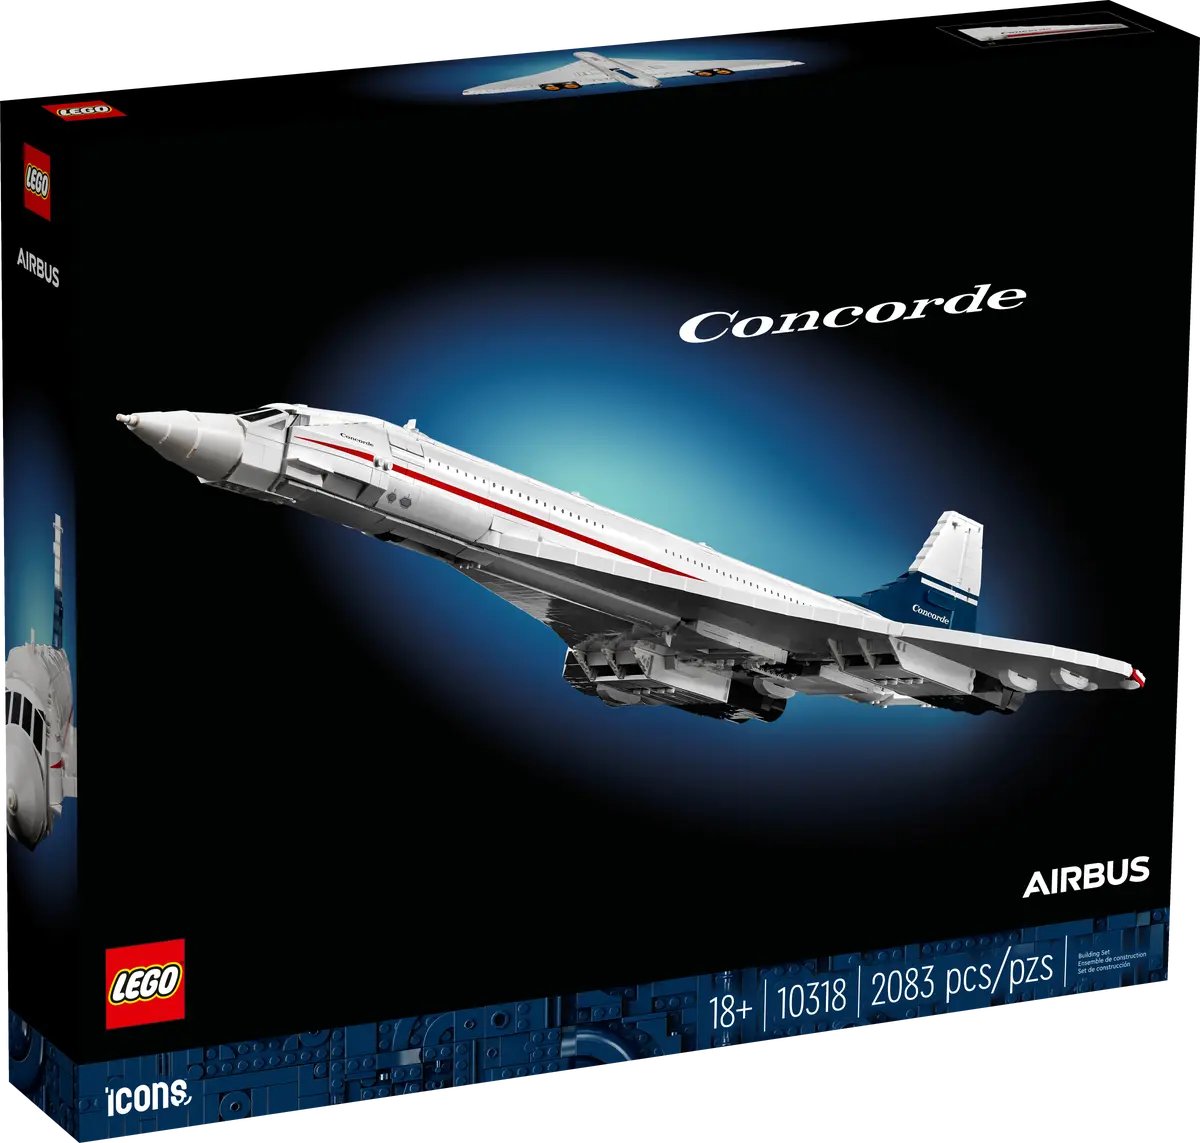 Lego icons Concorde 10318 цена и фото